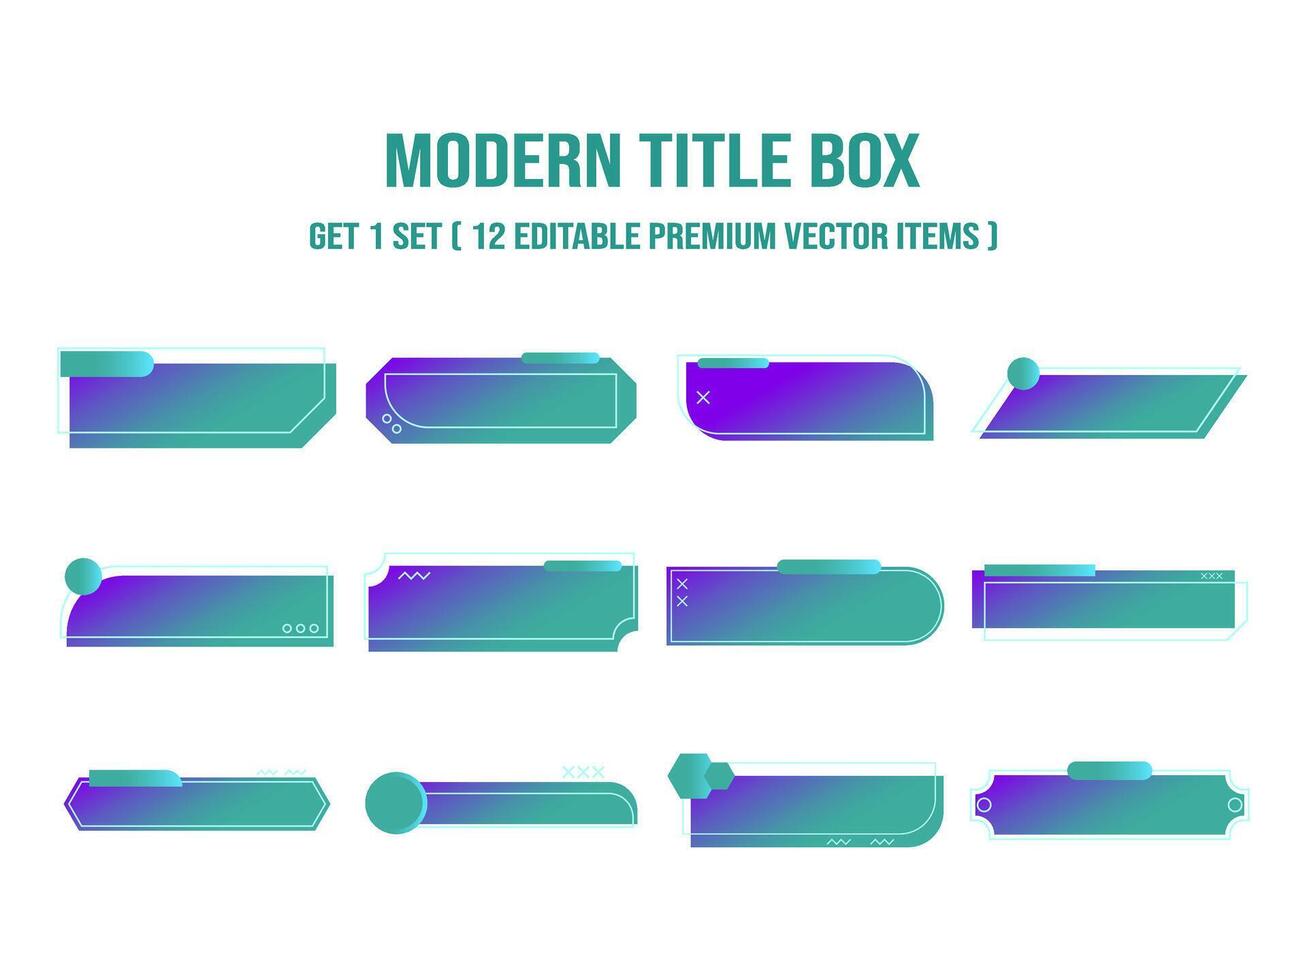 moderno digital texto caja, título caja marco conjunto vector